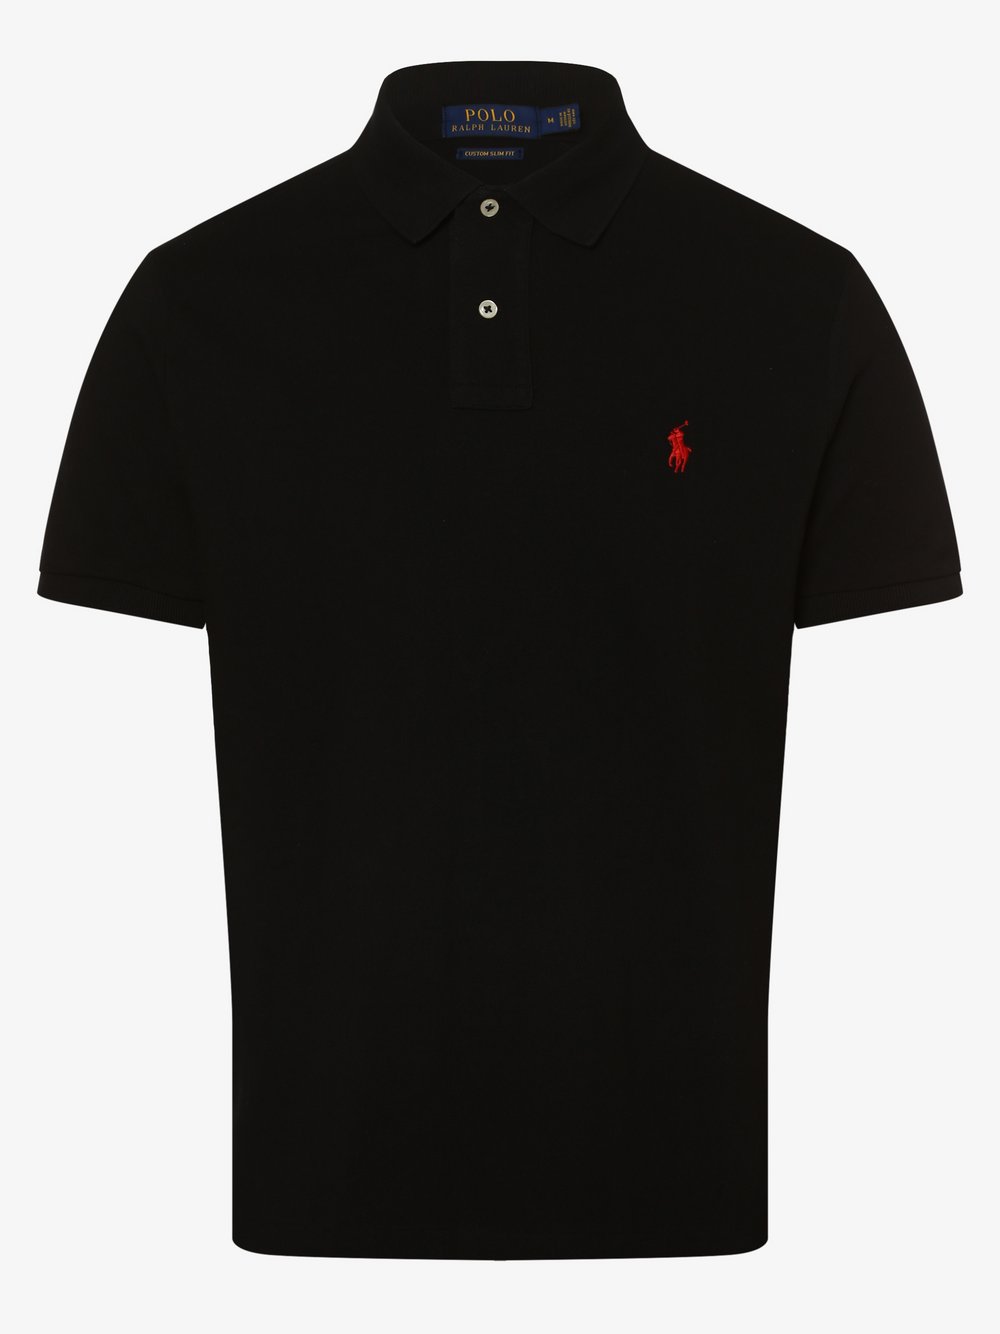 Polo Ralph Lauren - T-shirt męski, czarny